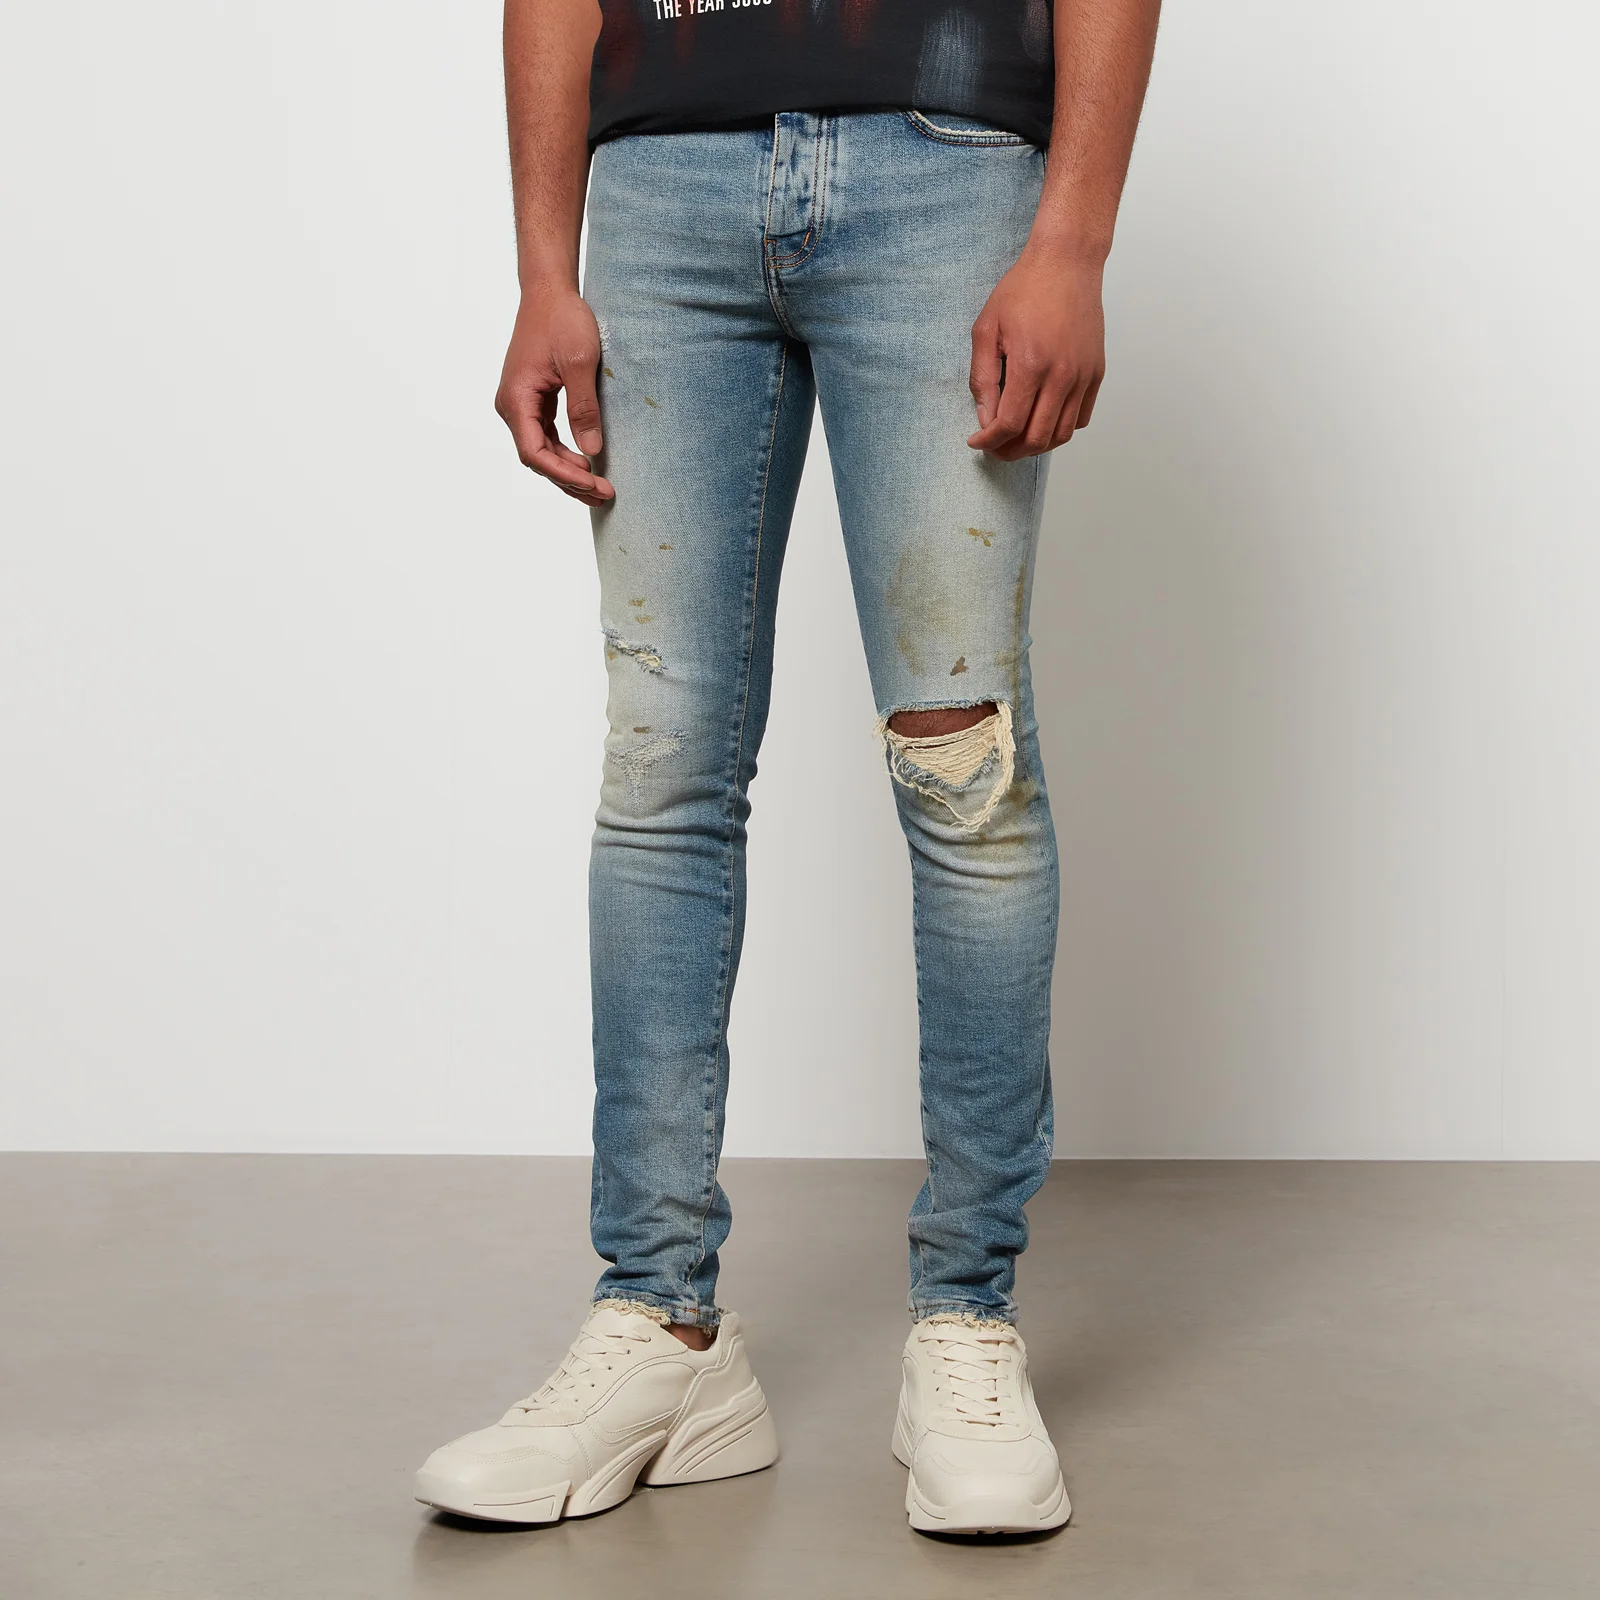 Purple Brand Men's Blowout Denim Jeans - Worn Light Indigo Image 1